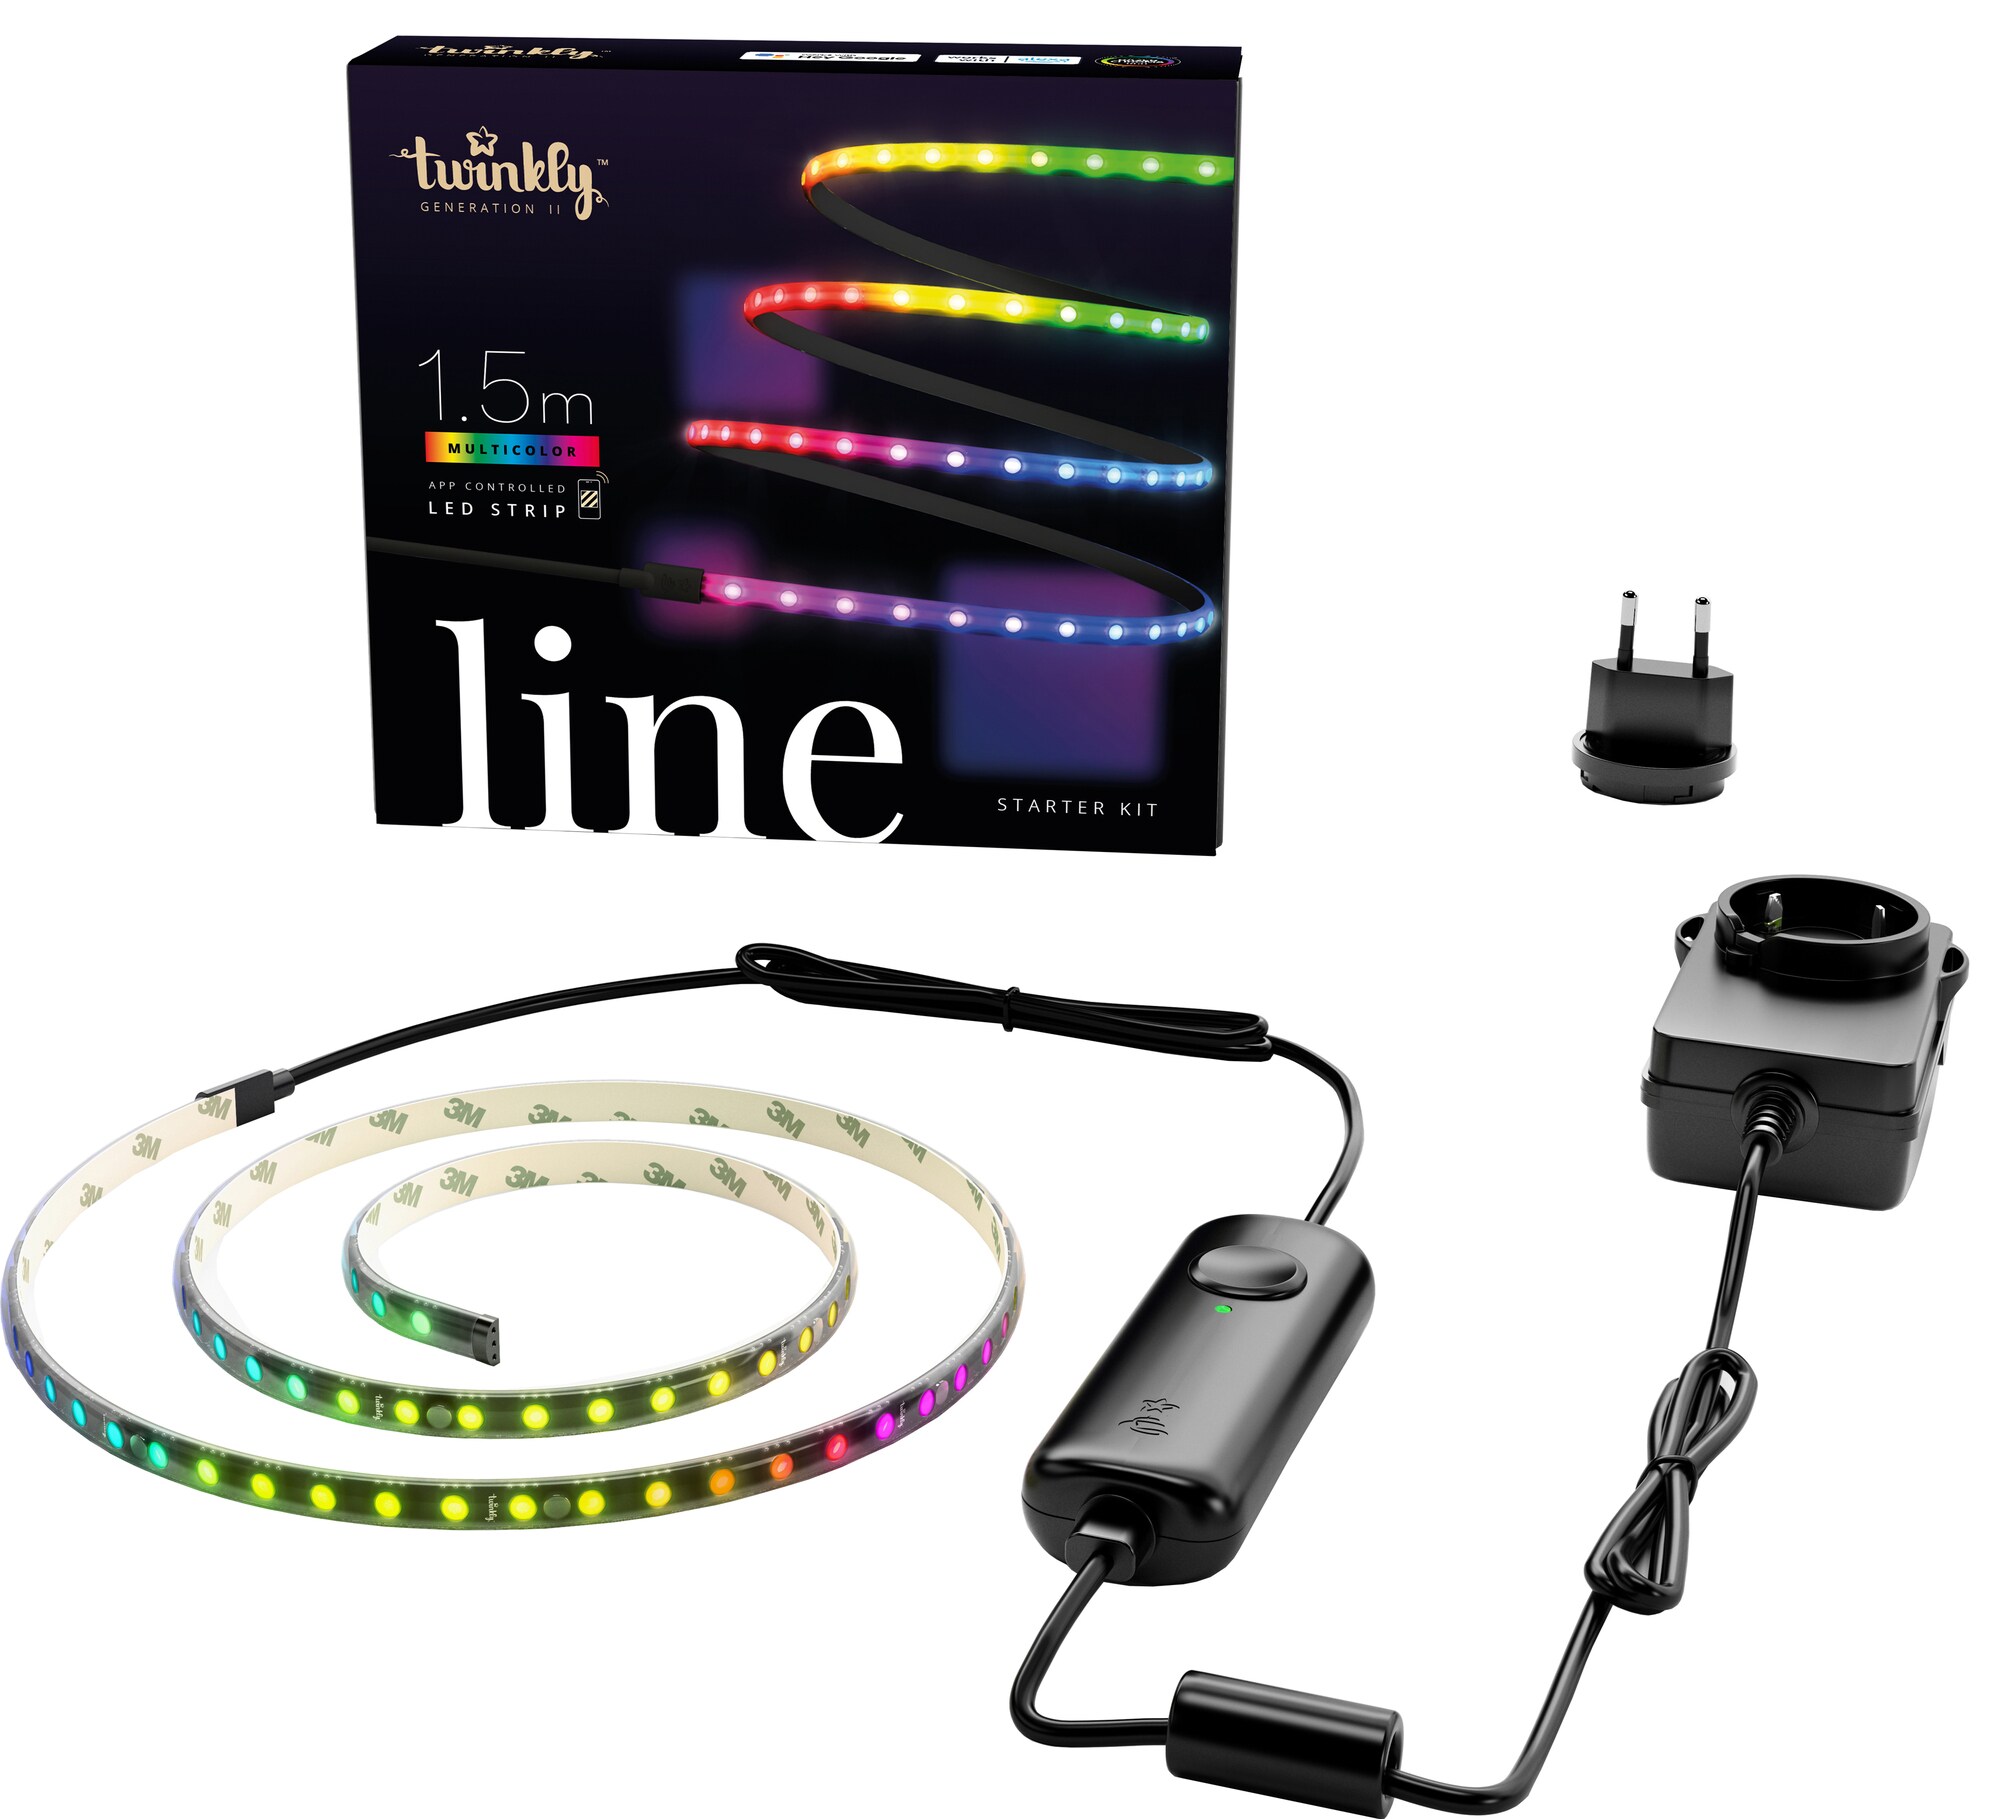 2: Twinkly Line Starter Kit - App-controlled RGB LED light strip. 1.5 Meters. Black Strip. Extendible